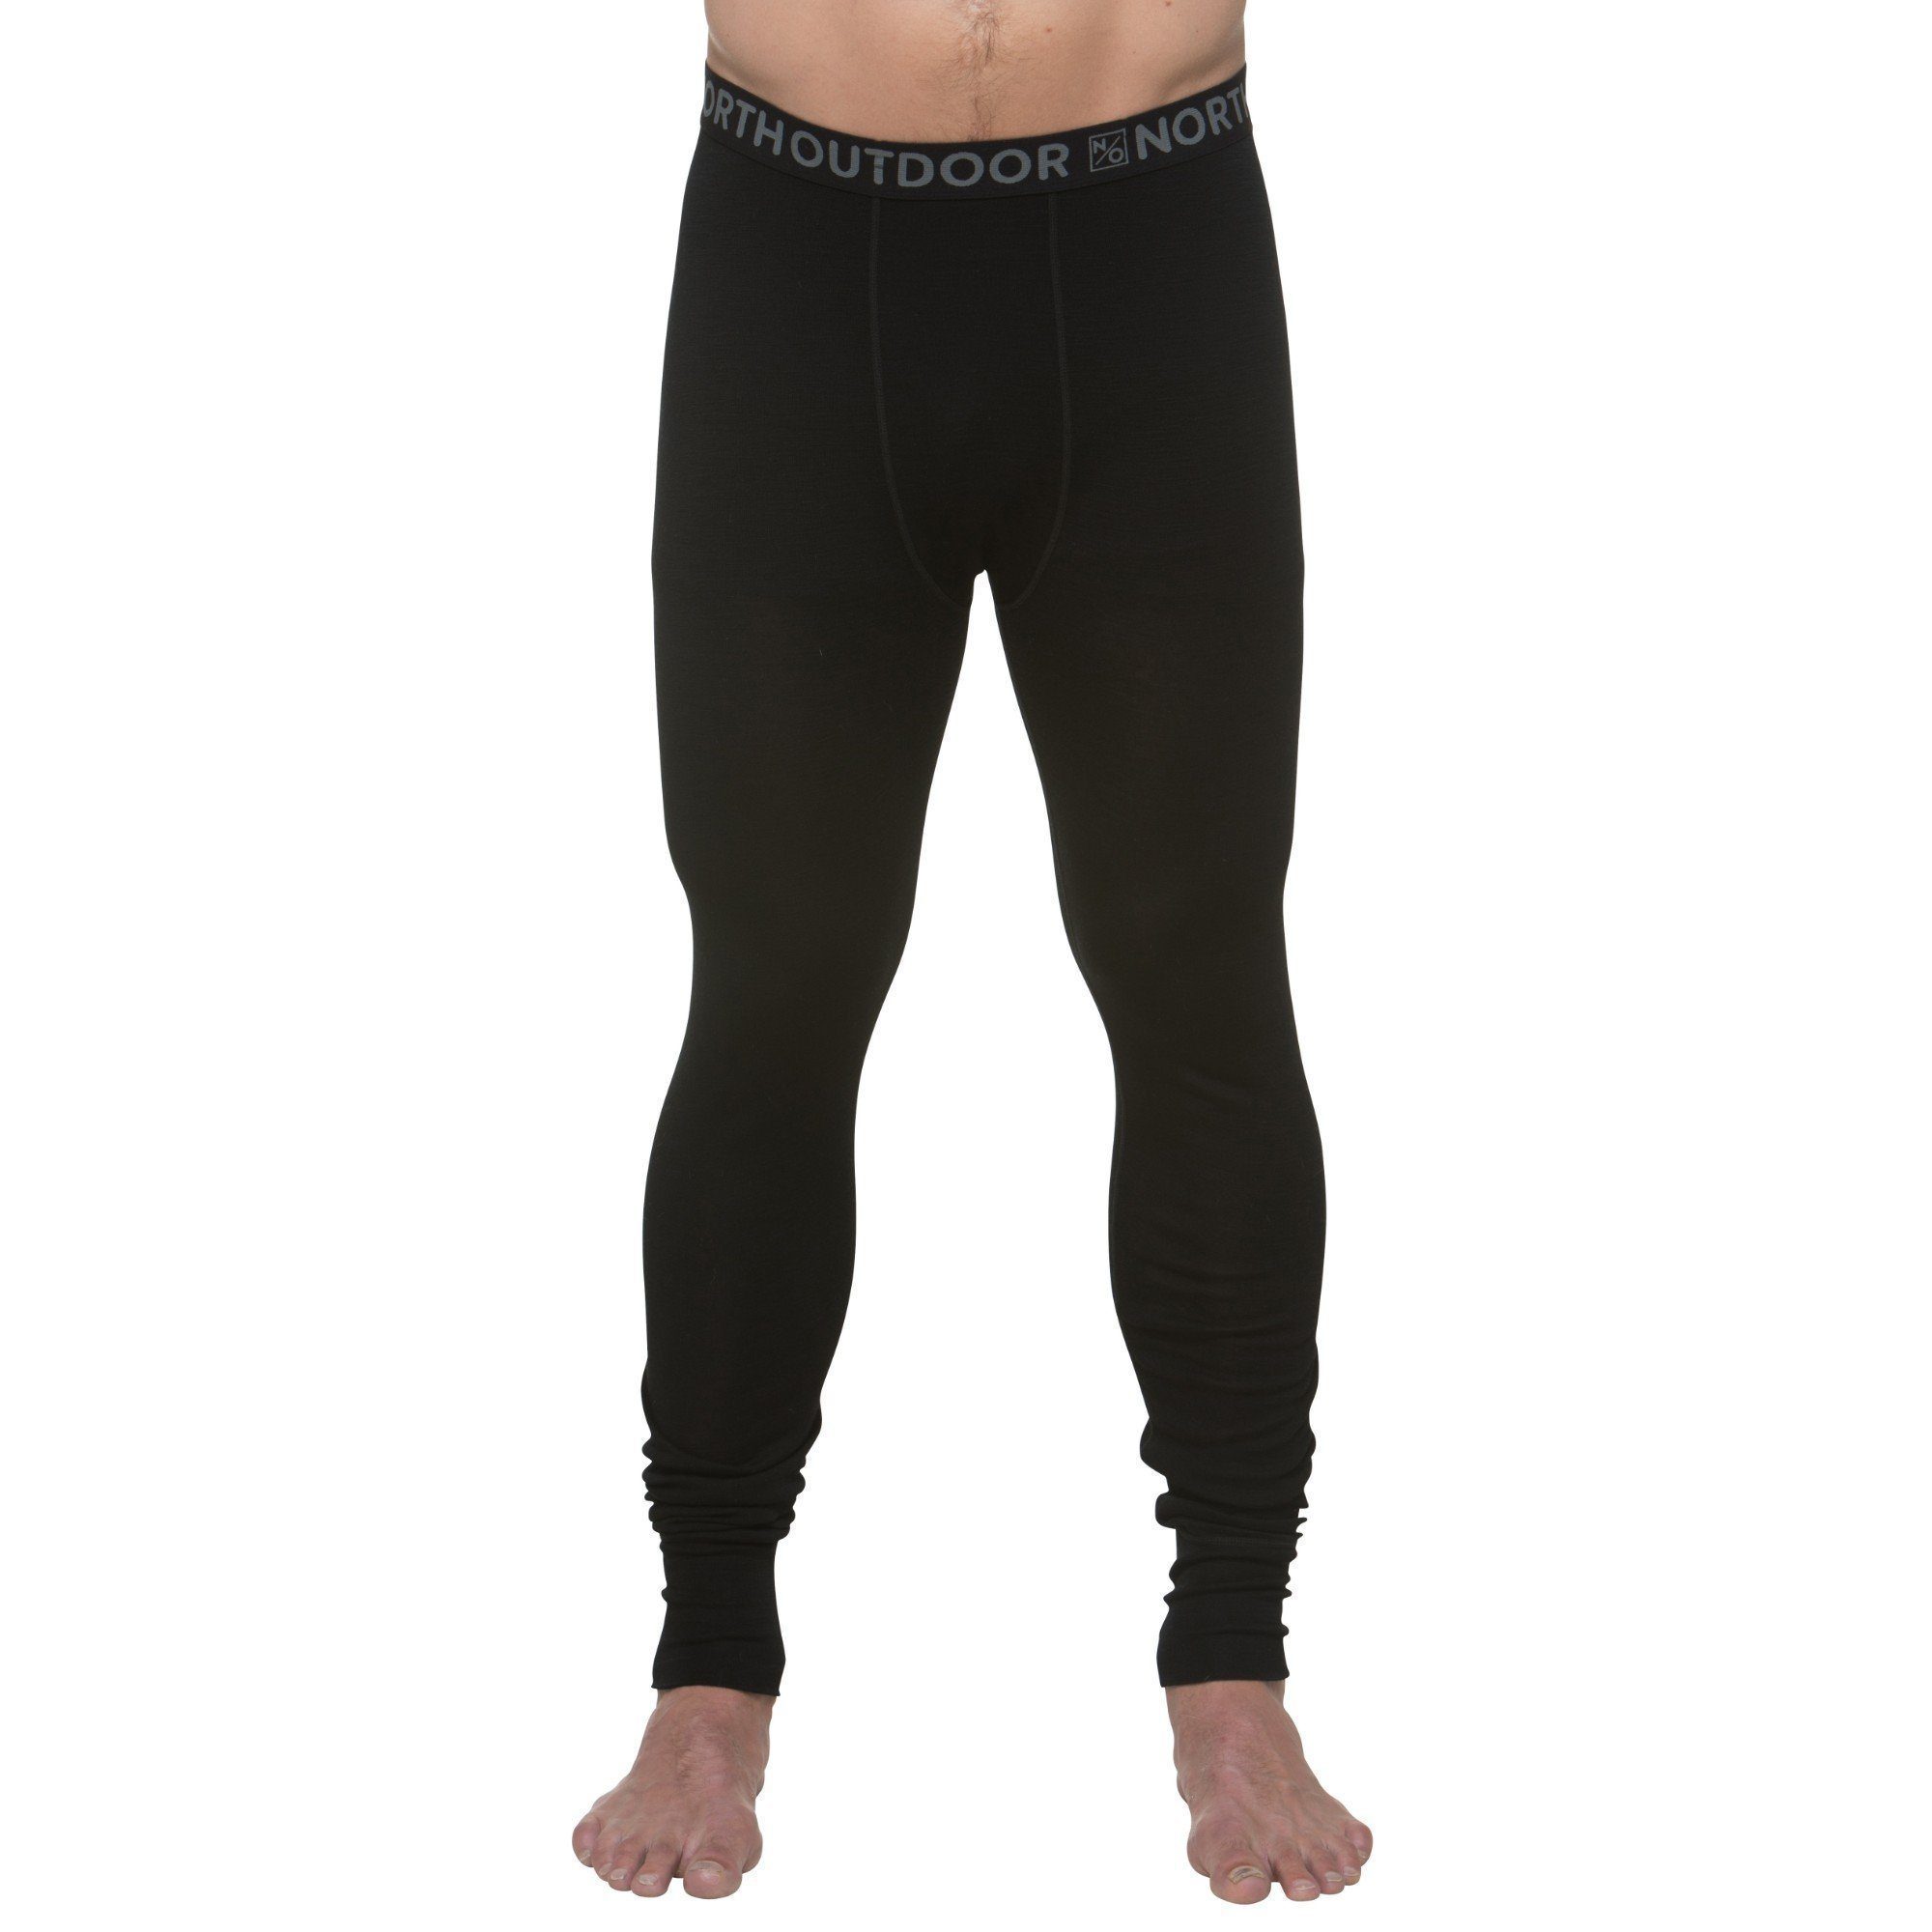 North Outdoor Baselayer Pants - 100 % Merino Wool - ACTIVE 210, Black / S